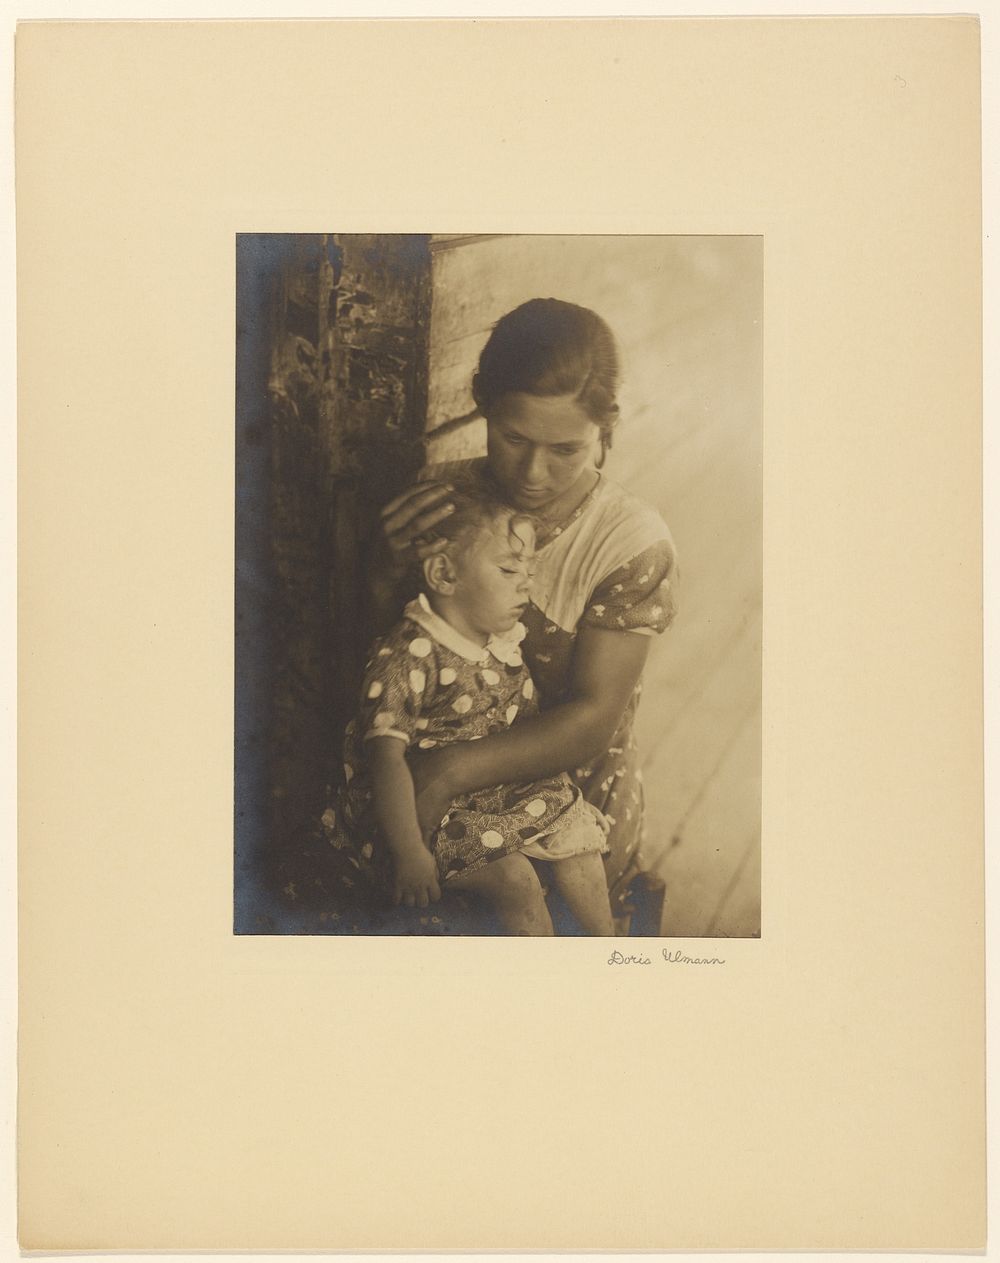 Teenager with Sleeping Child, Linefork, Kentucky by Doris Ulmann